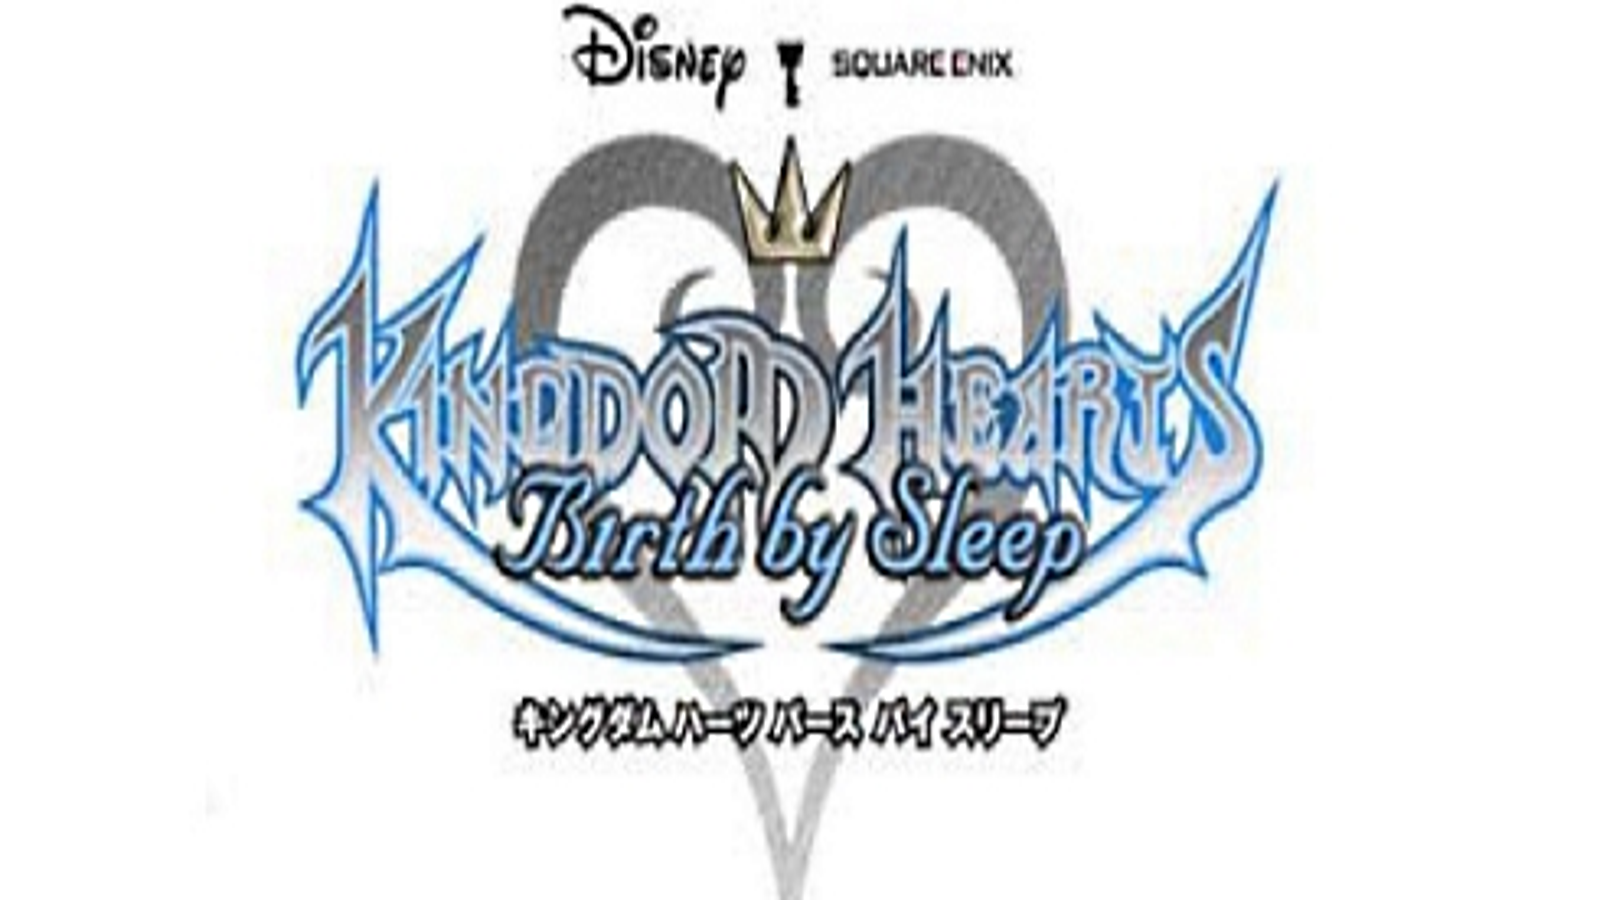 Kingdom Hearts: Birth By Sleep gets summer release in Europe